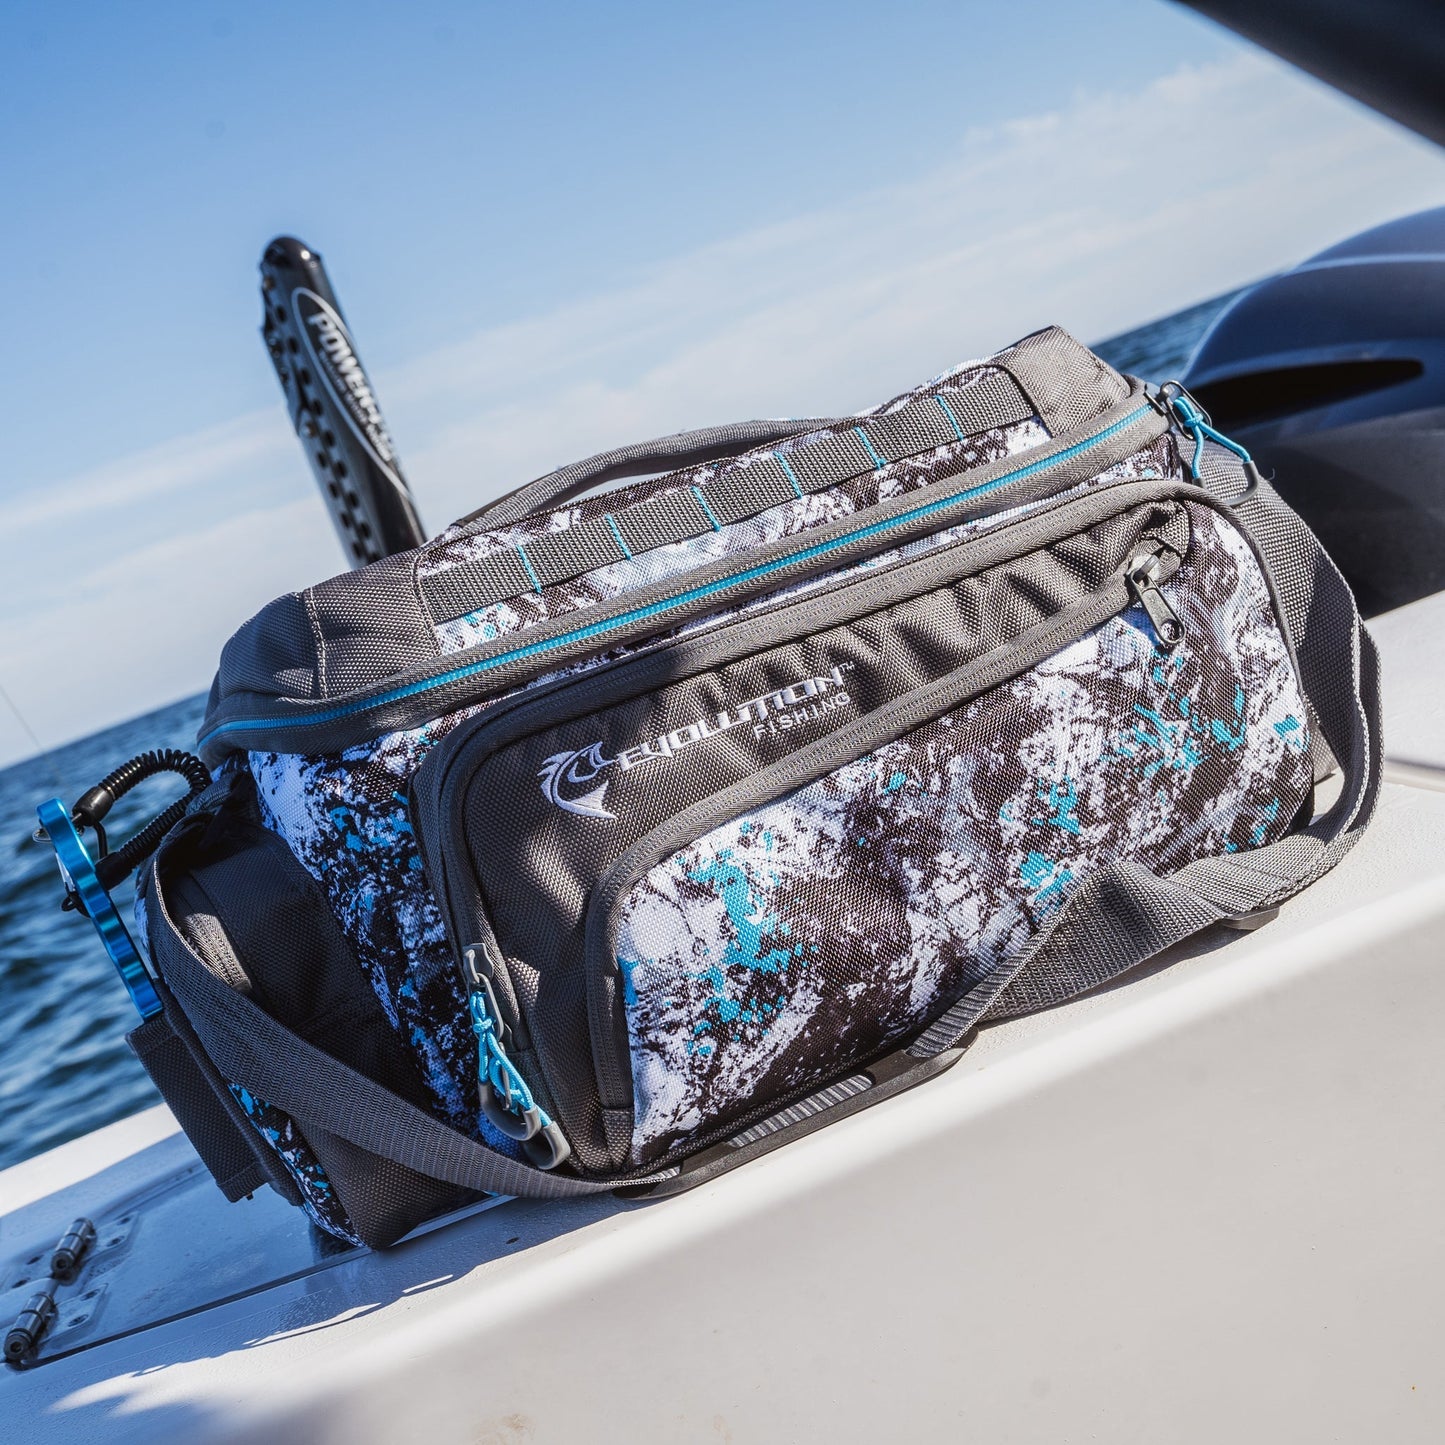 Evolution Fishing Largemouth 3600 Tackle Bag - Quartz Blue - Angler's Pro Tackle & Outdoors